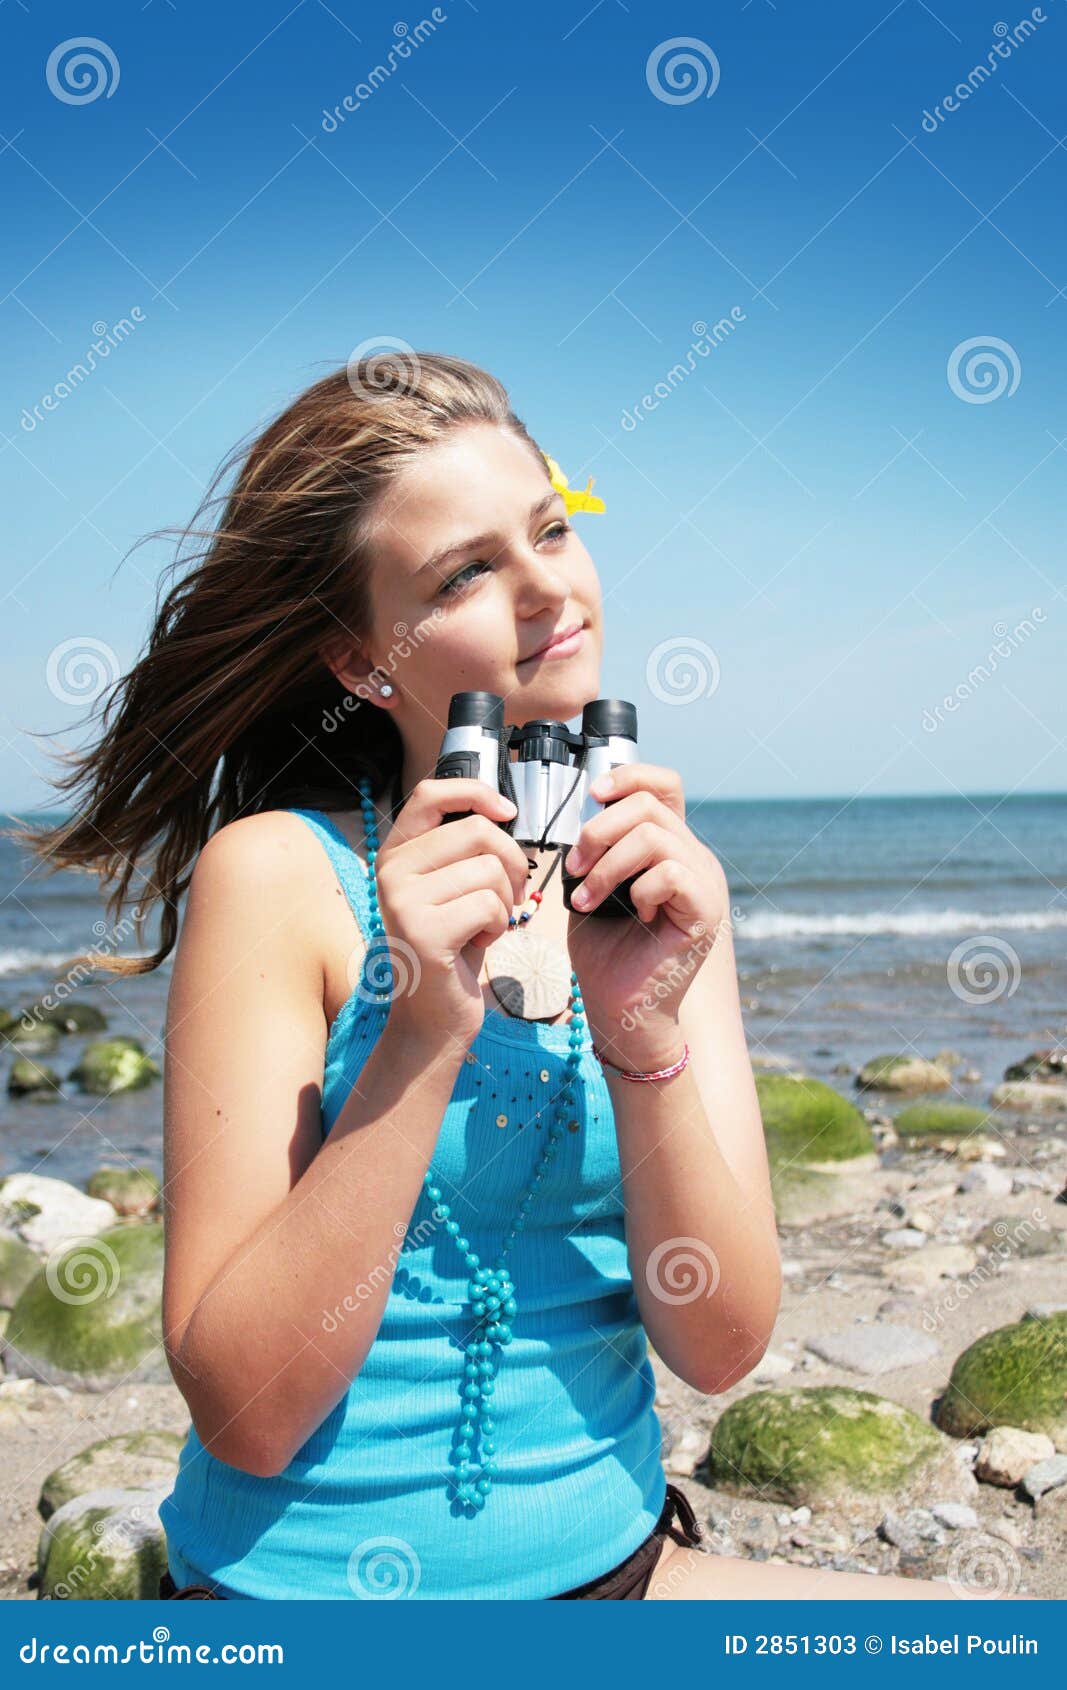 teenager with binocular